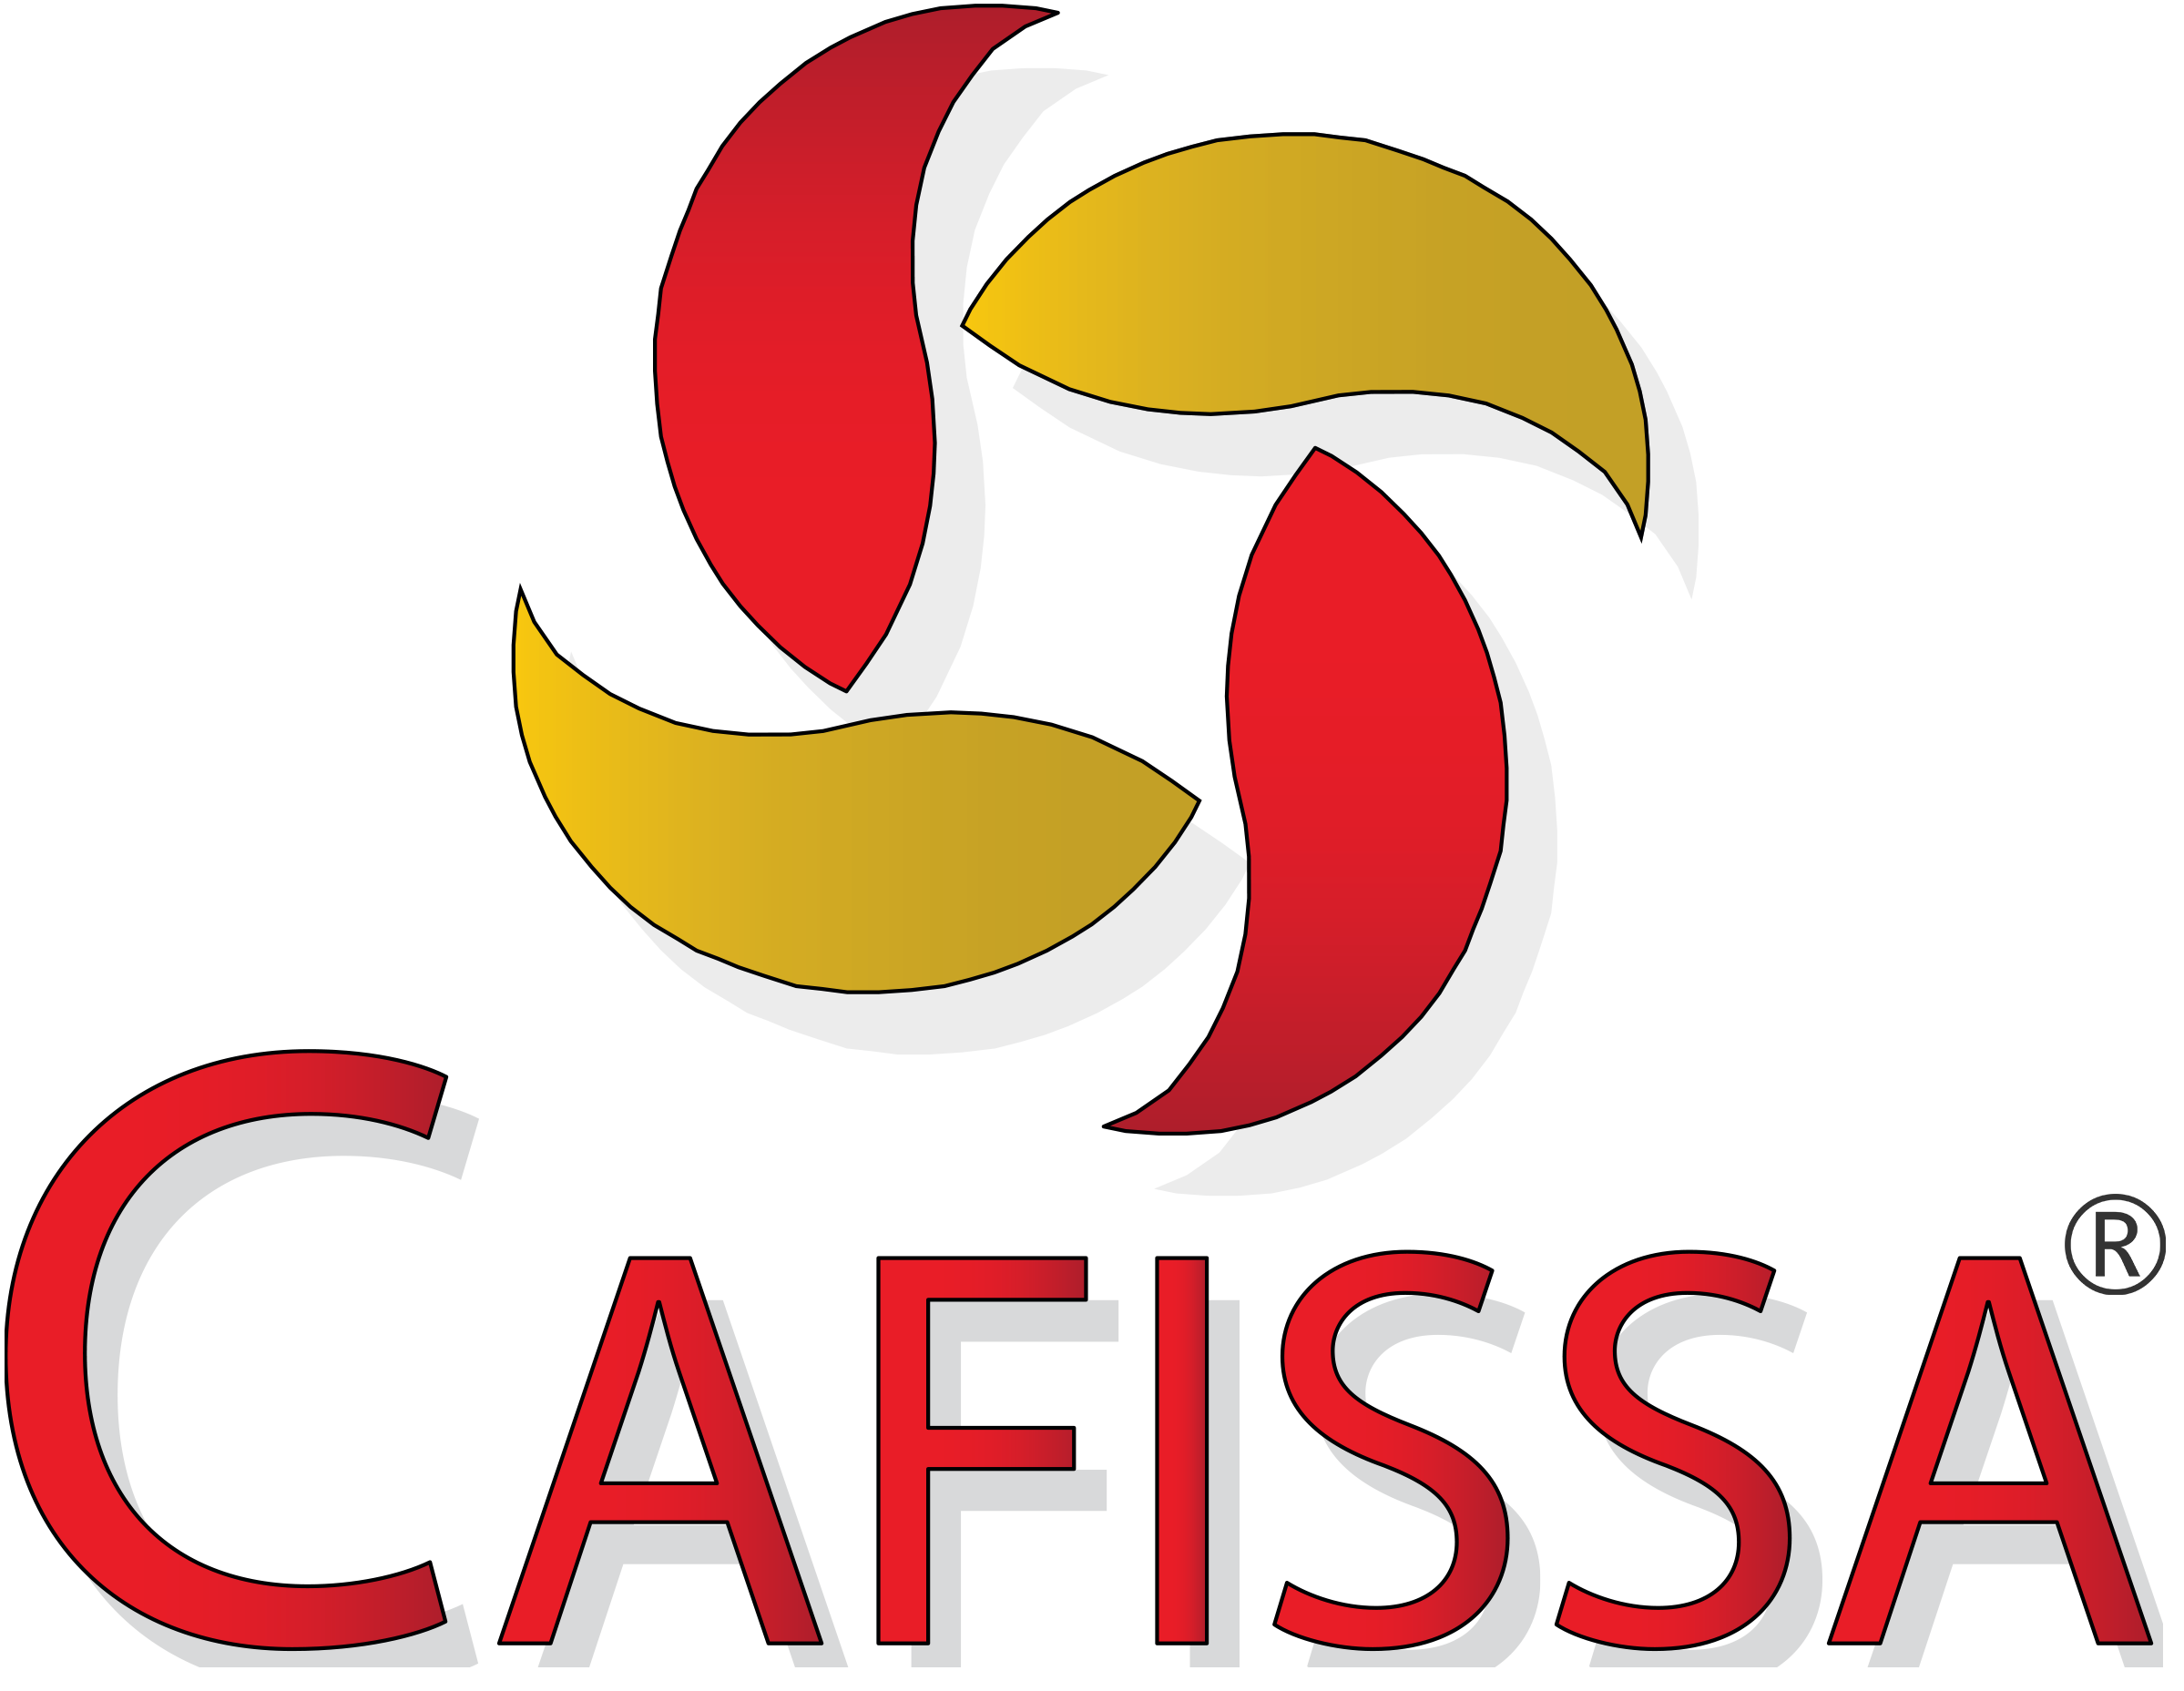 Cafissa Capital